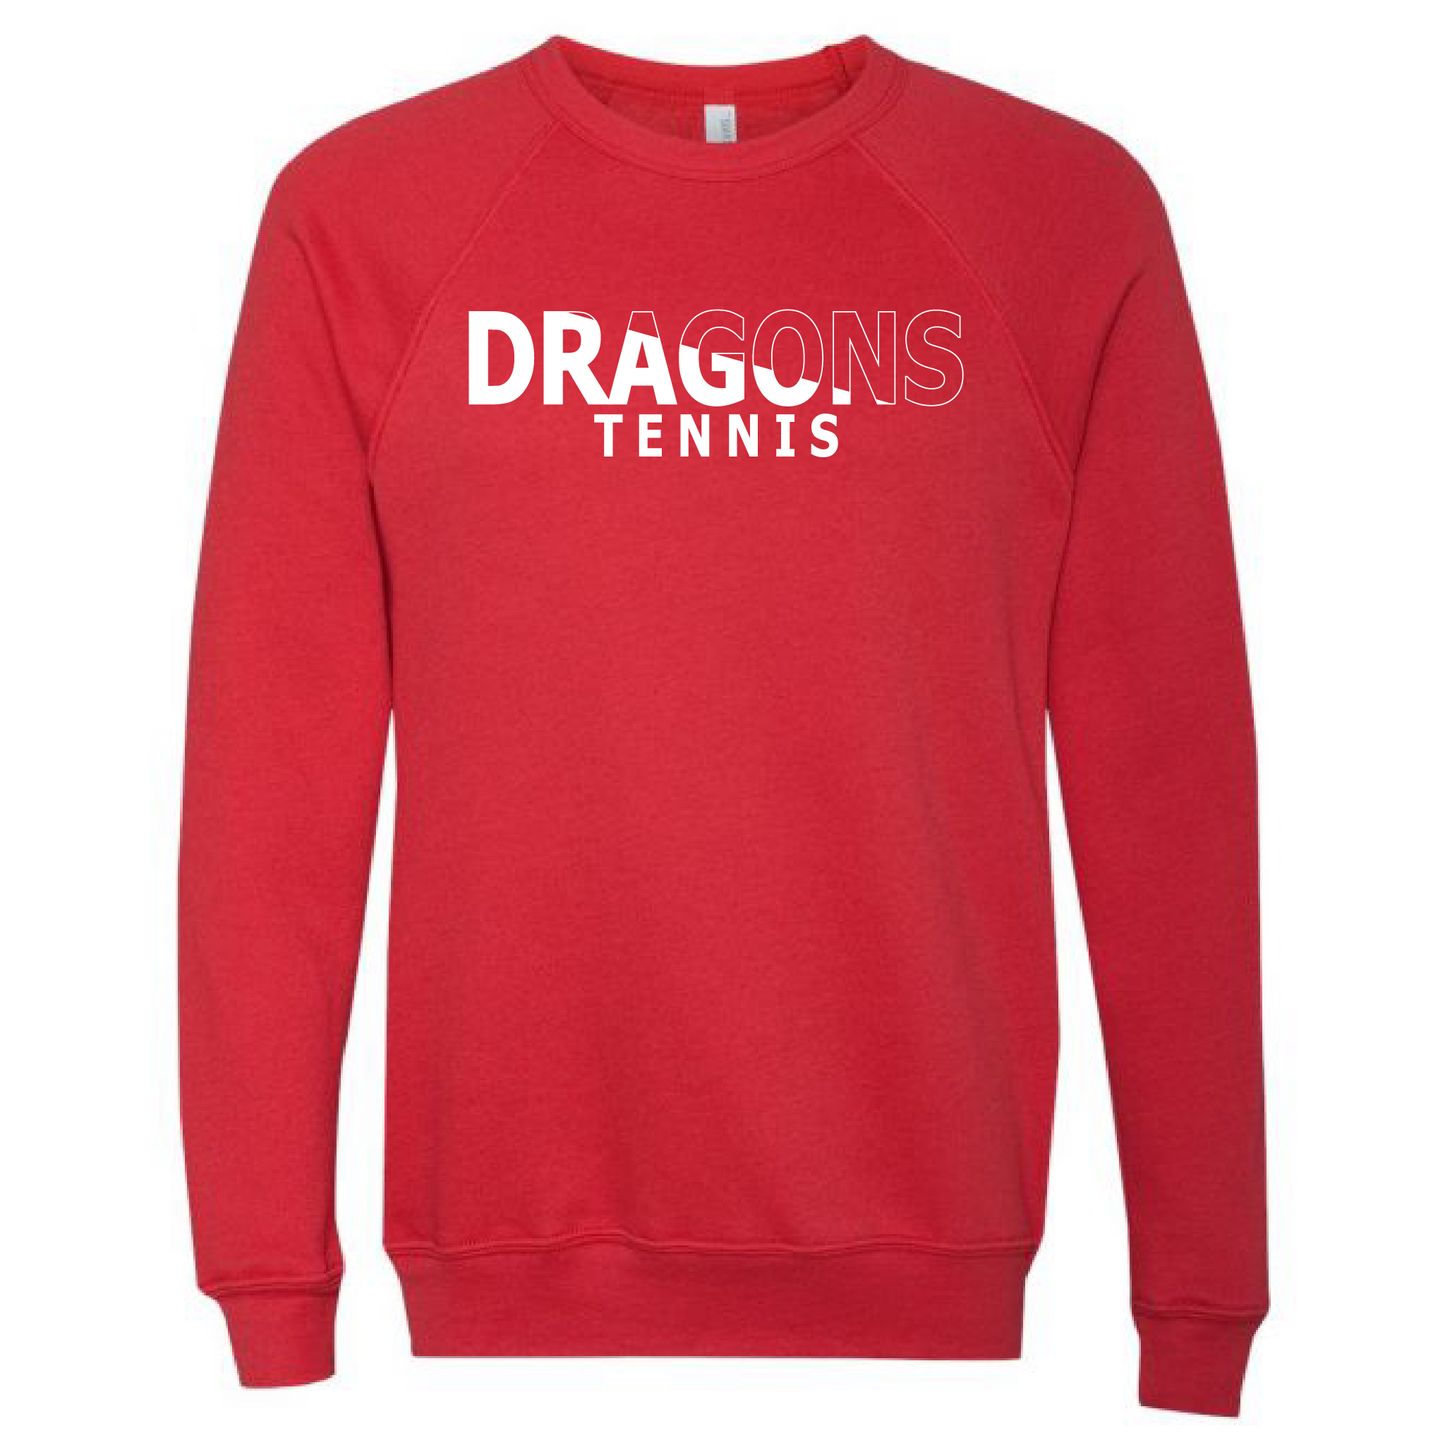 Unisex Sweatshirt - Dragons Tennis Slashed White